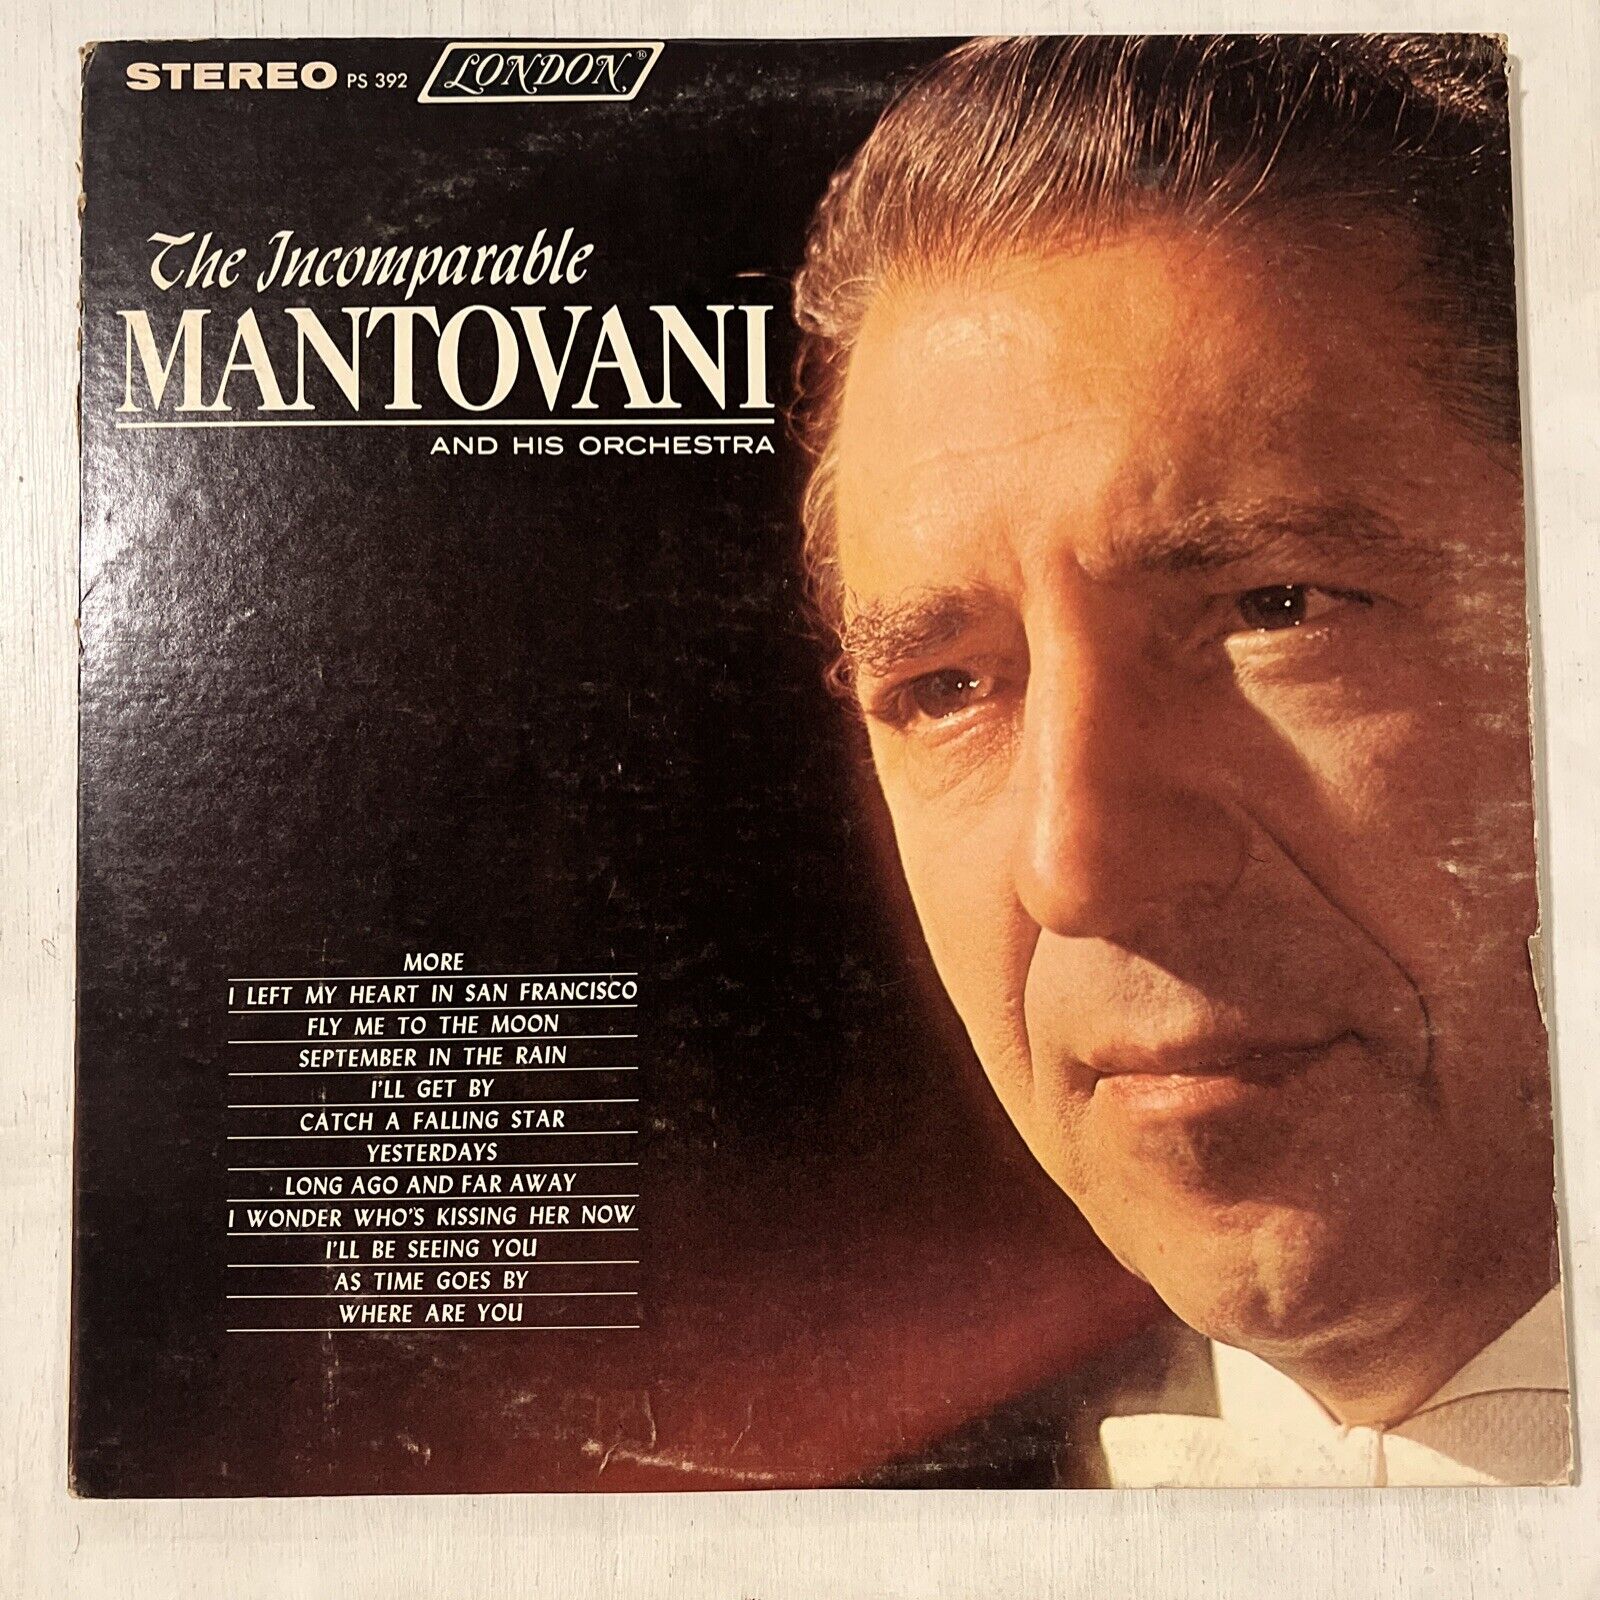 The Incomparable Mantovani - 1964 - London Records PS 392 Vinyl LP VG+/EX